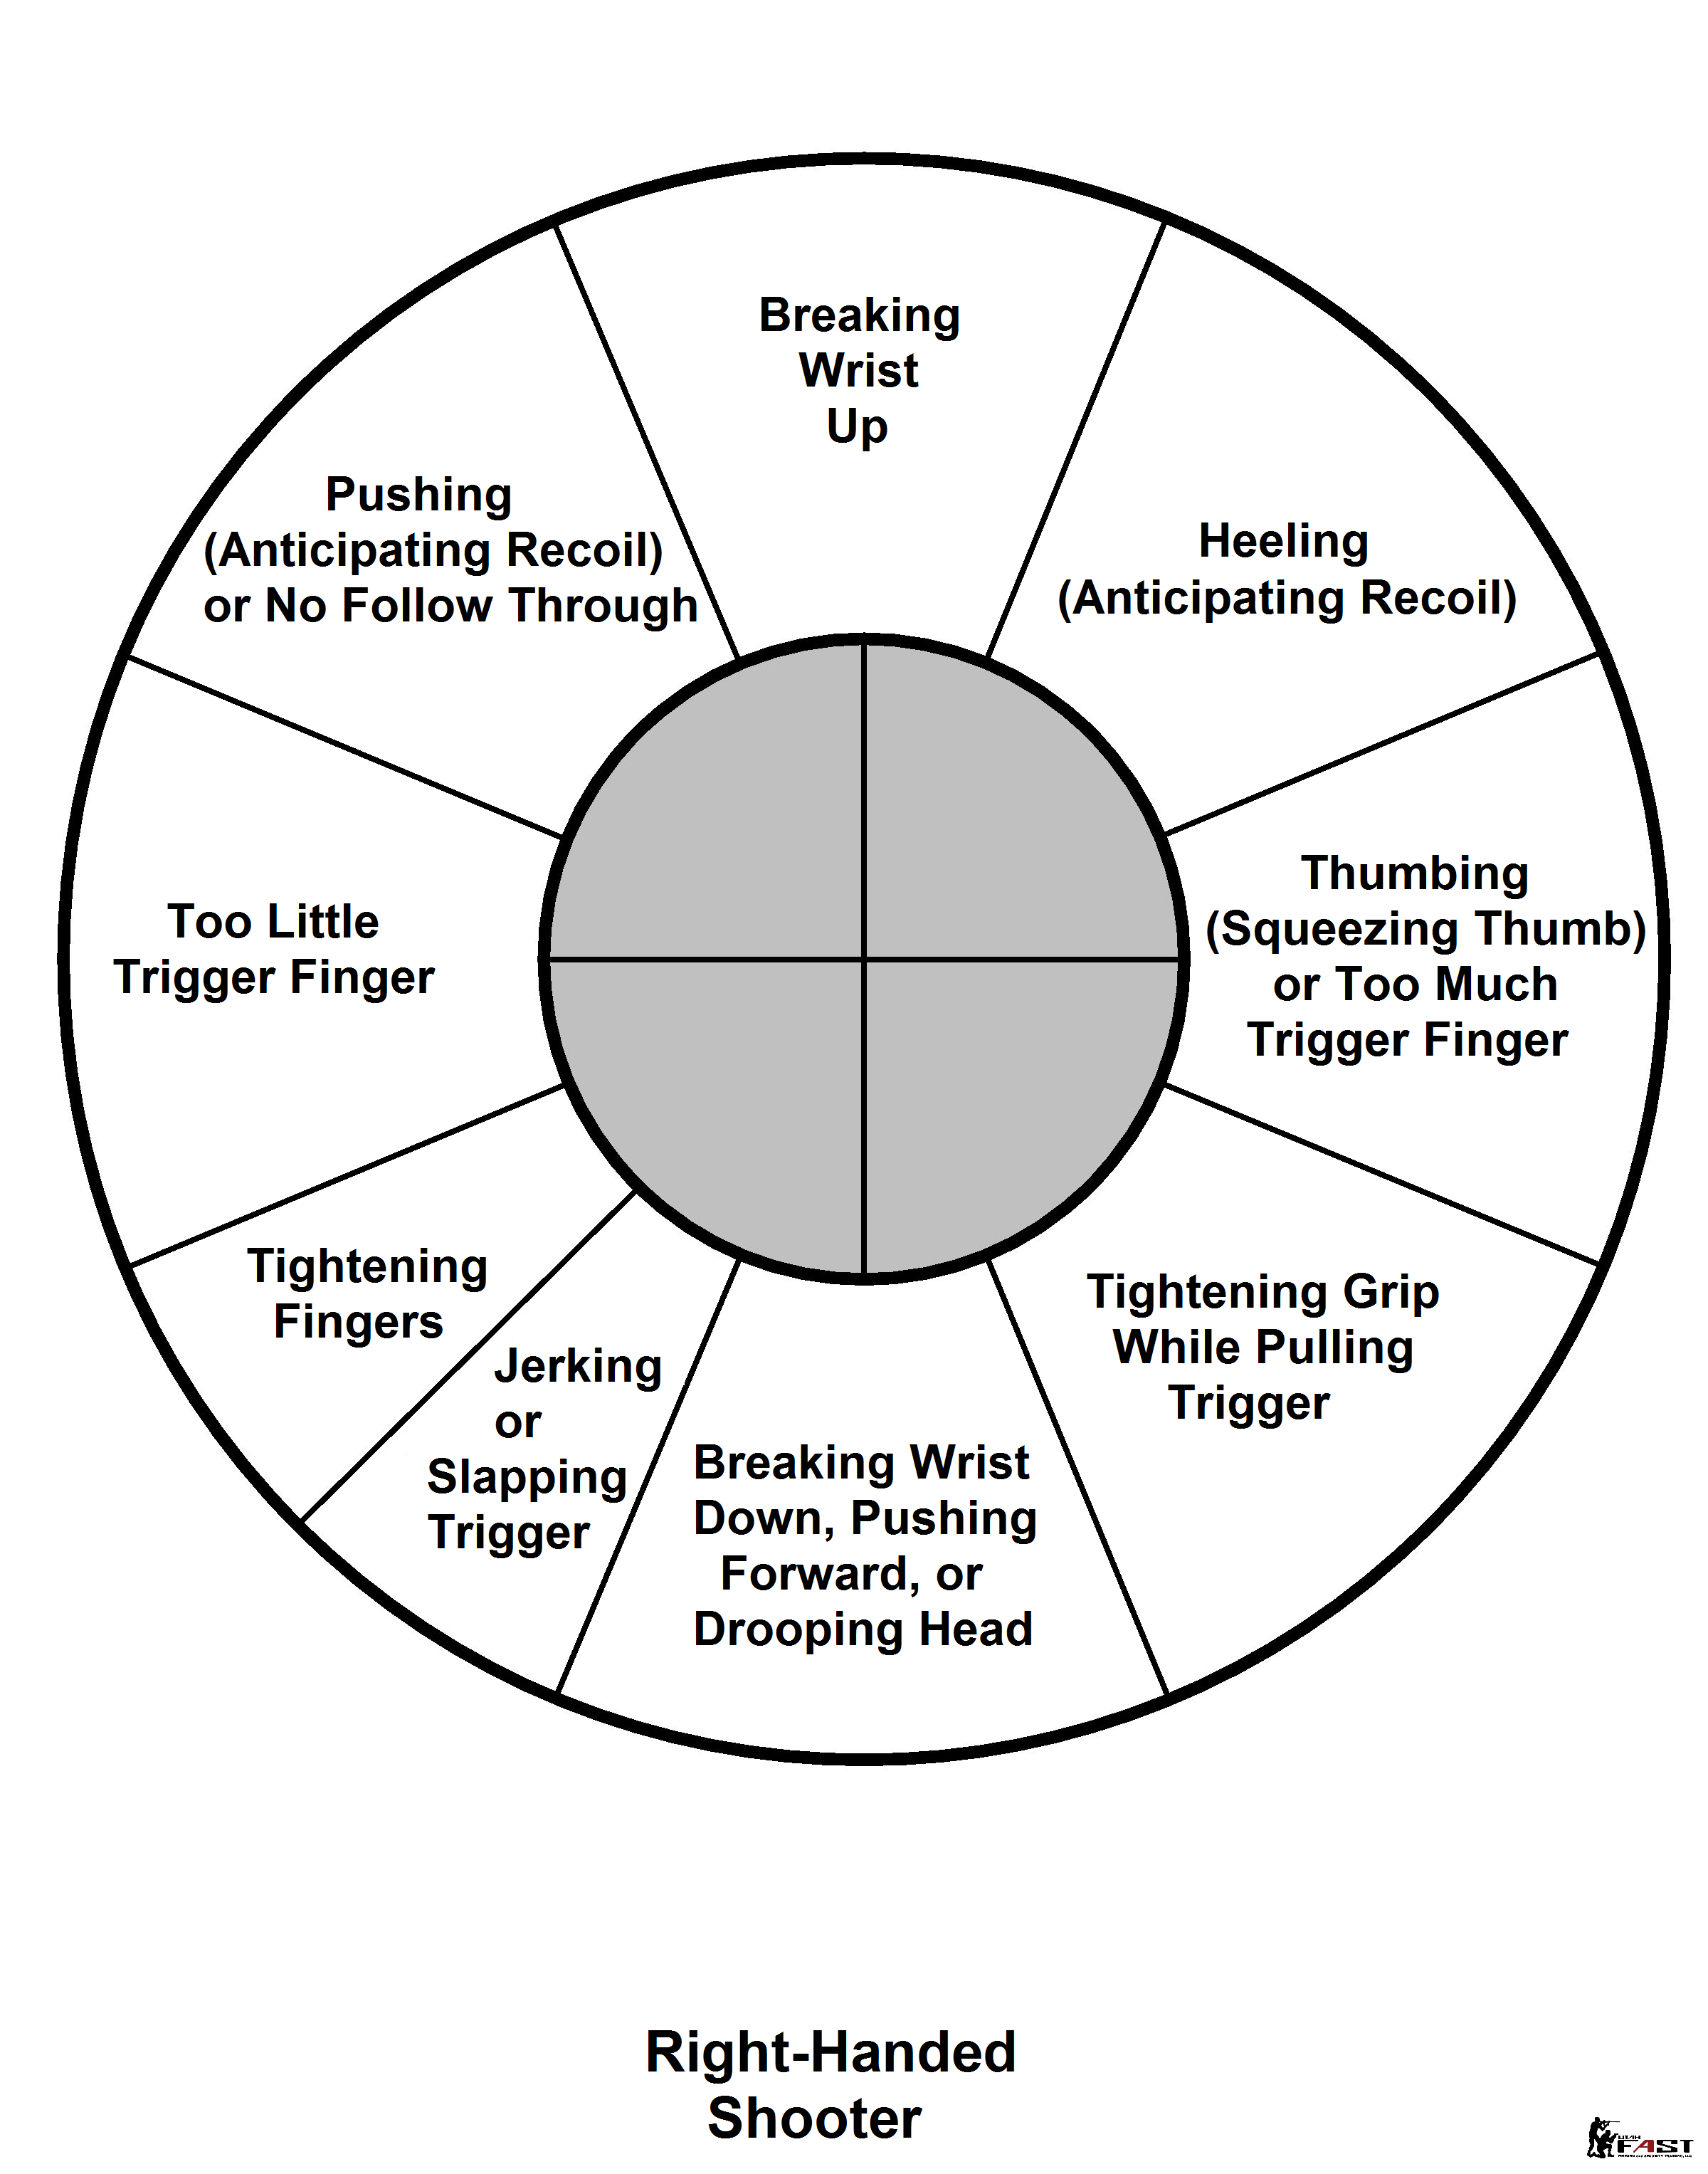 Trigger Finger Placement Chart